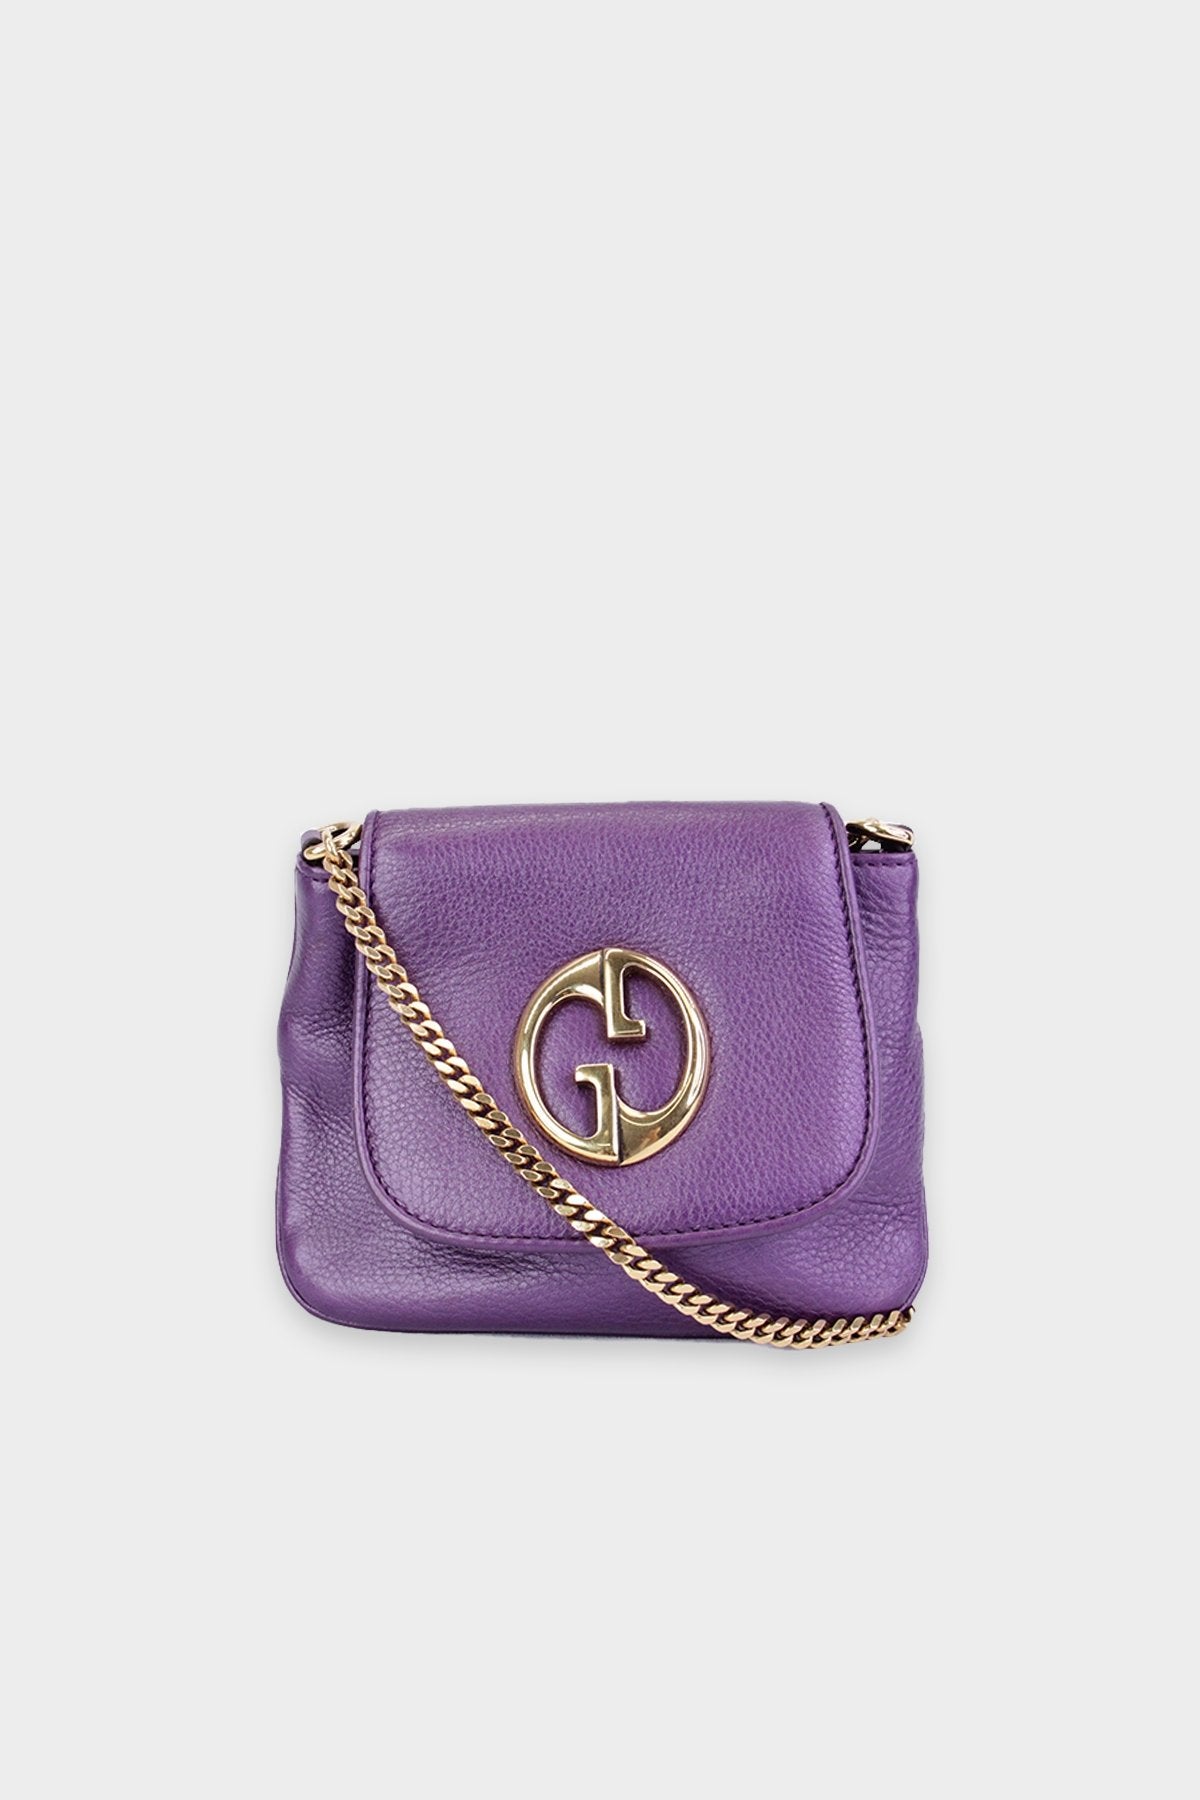 Gucci Purple Mini Handbag with Gold Chain - shop-olivia.com